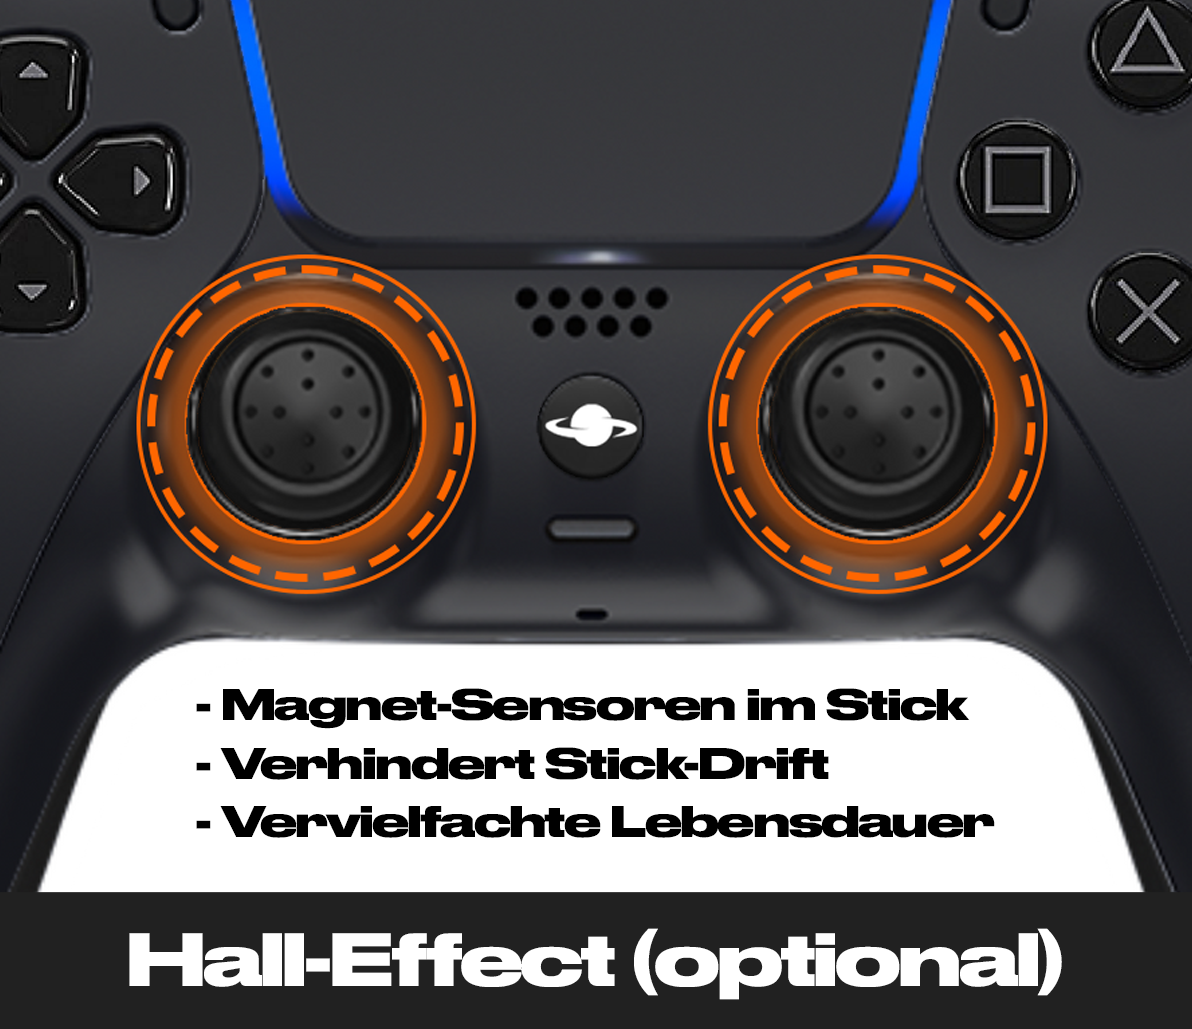 PS5 Custom Controller 'Gelb'